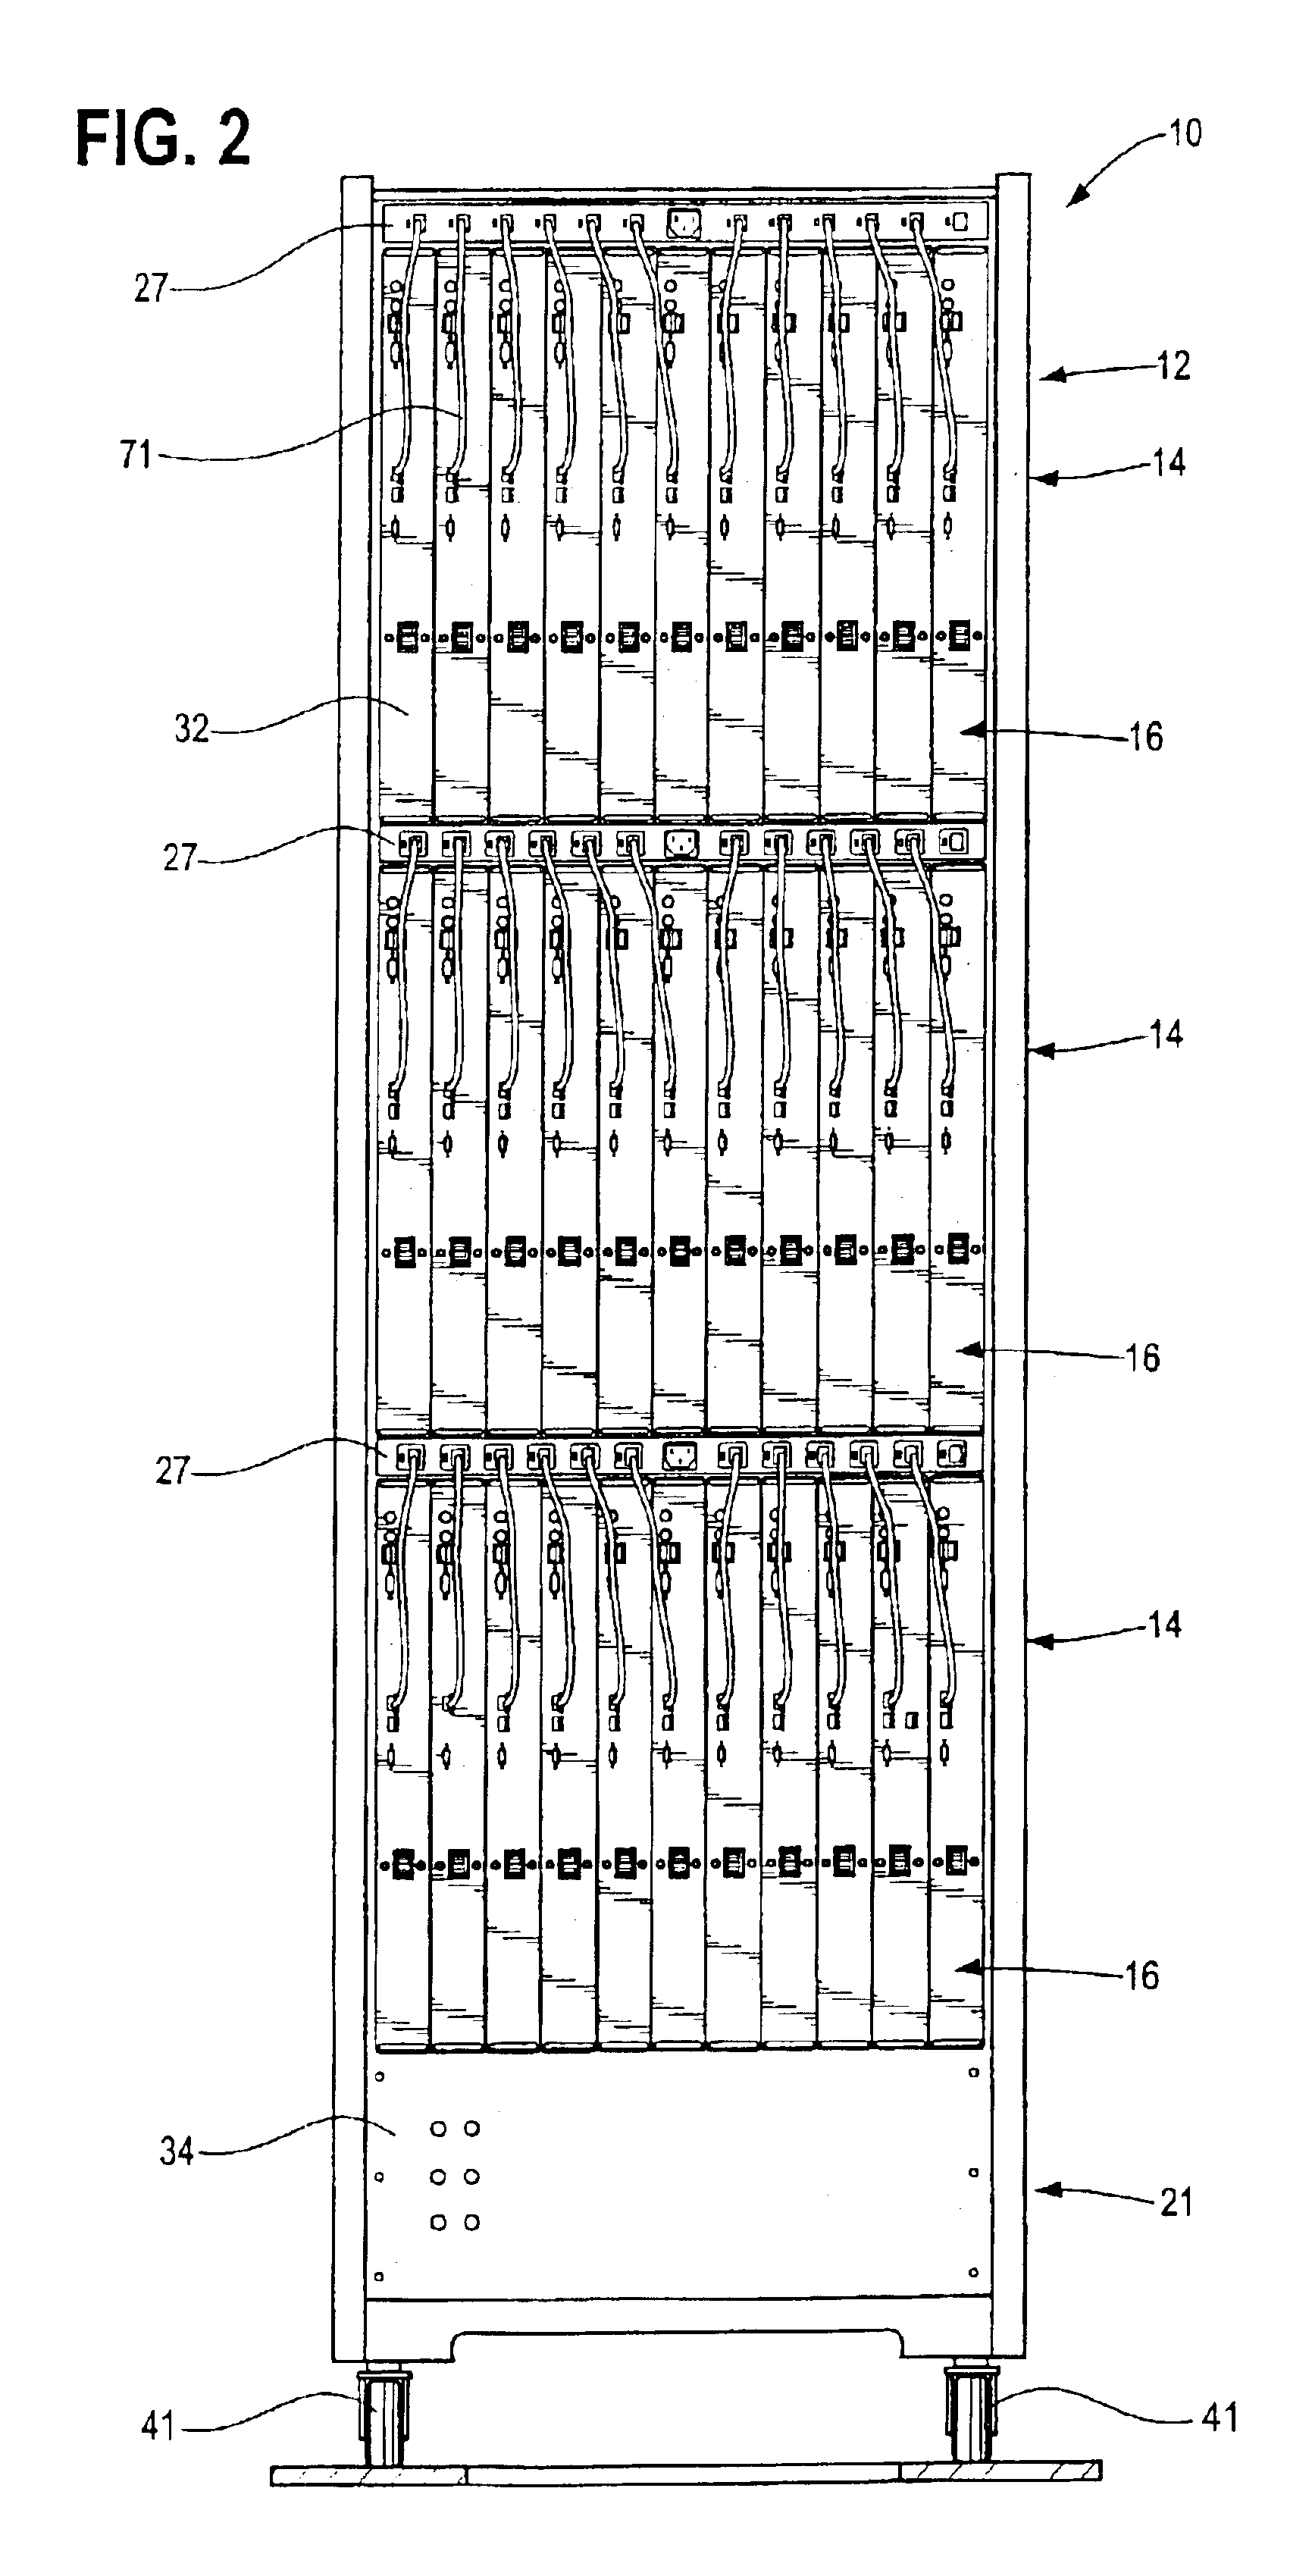 Rack mountable computer component and method of making same